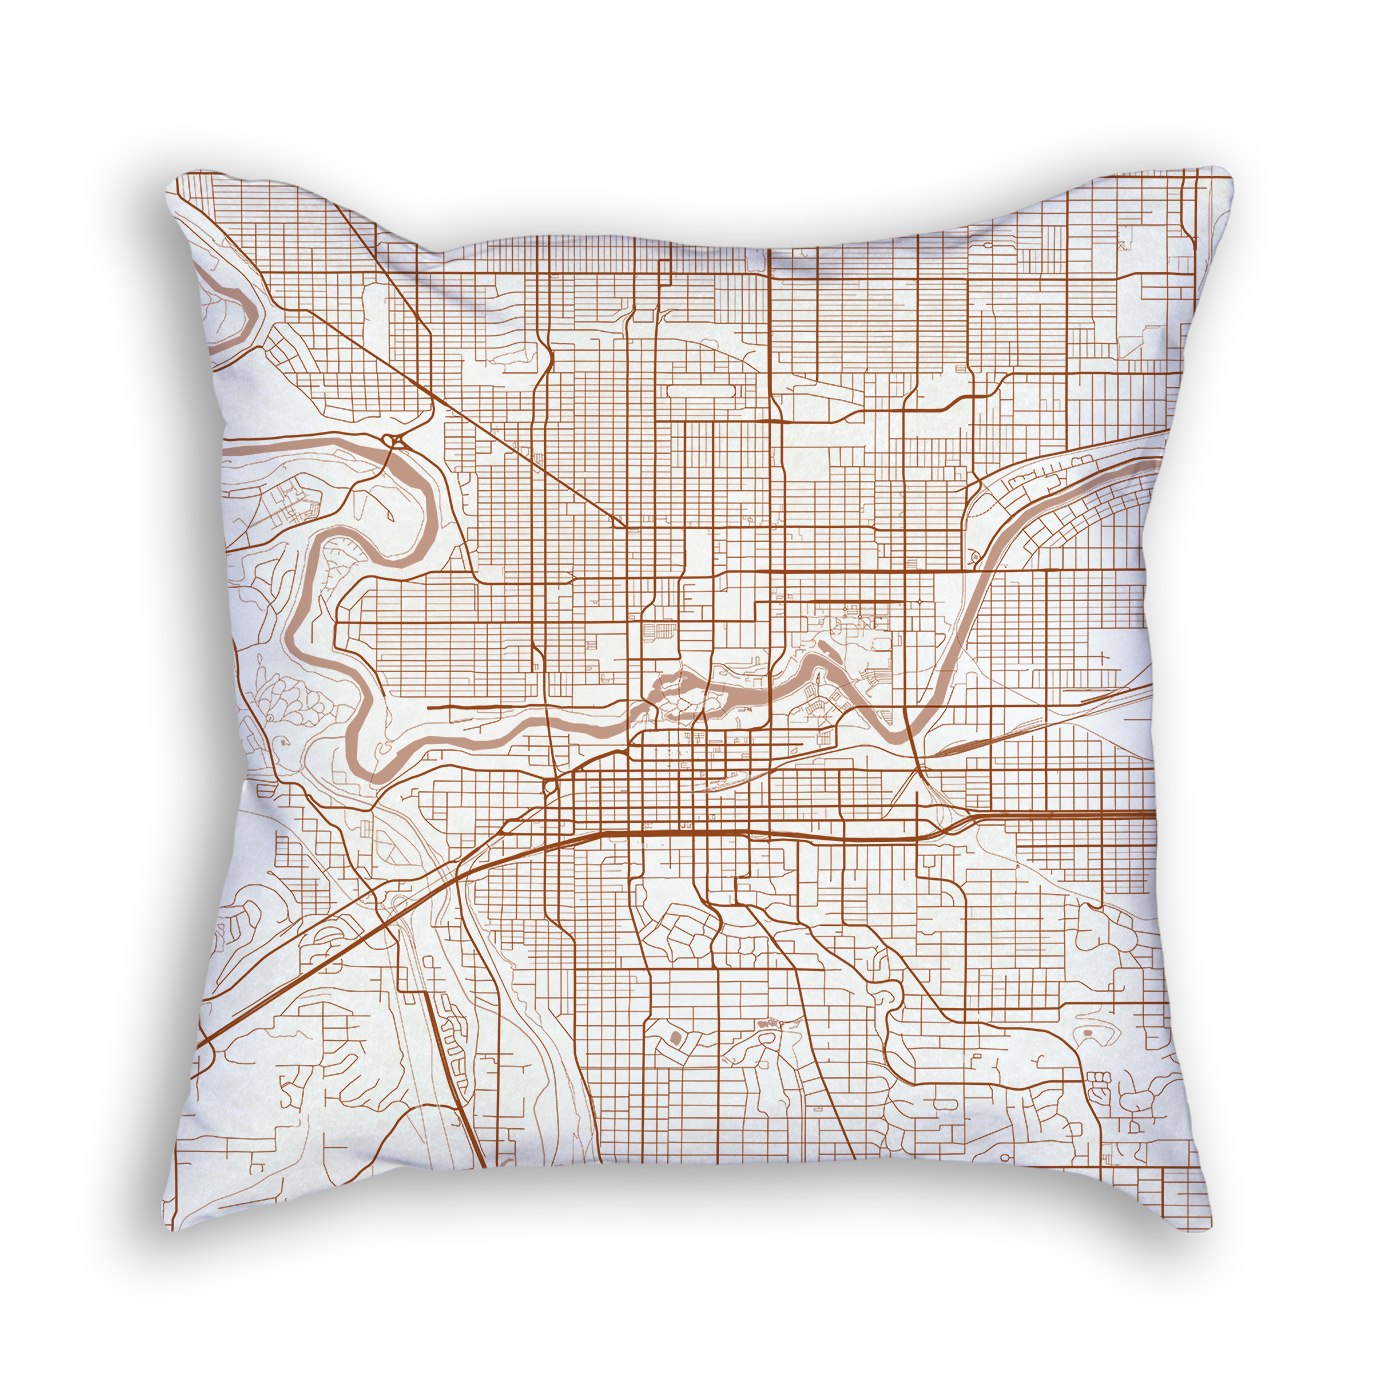 Spokane Washington City Map Art Decorative Throw Pillow